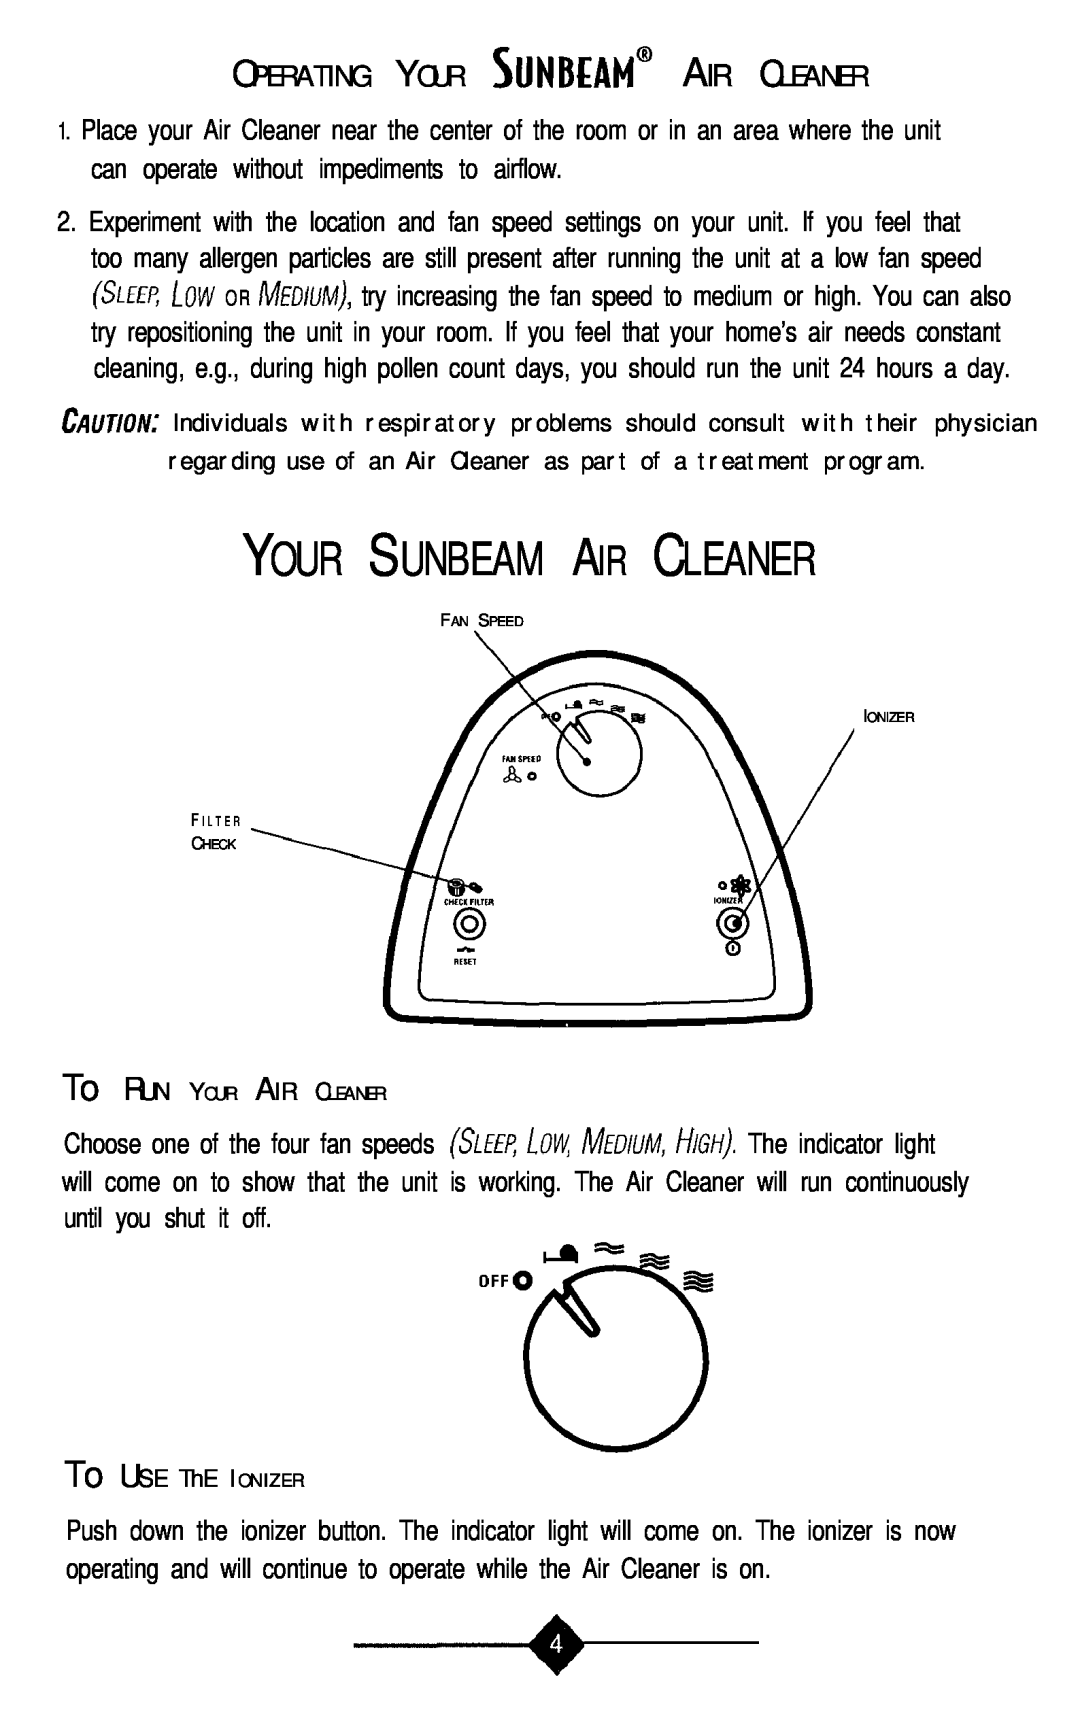 Sunbeam 2543, 2544 instruction manual Your Sunbeam Air Cleaner, Operating Your Sunblam@ Air Cleaner 